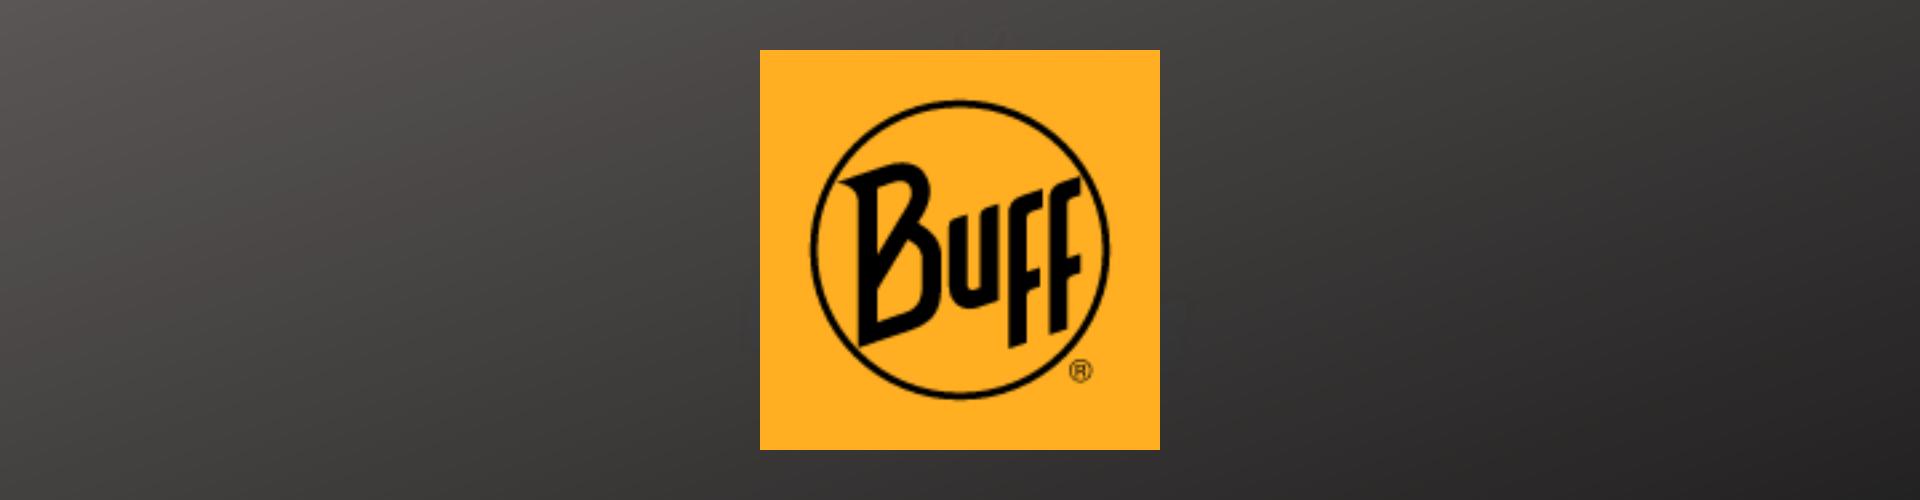 Buff Brand Category